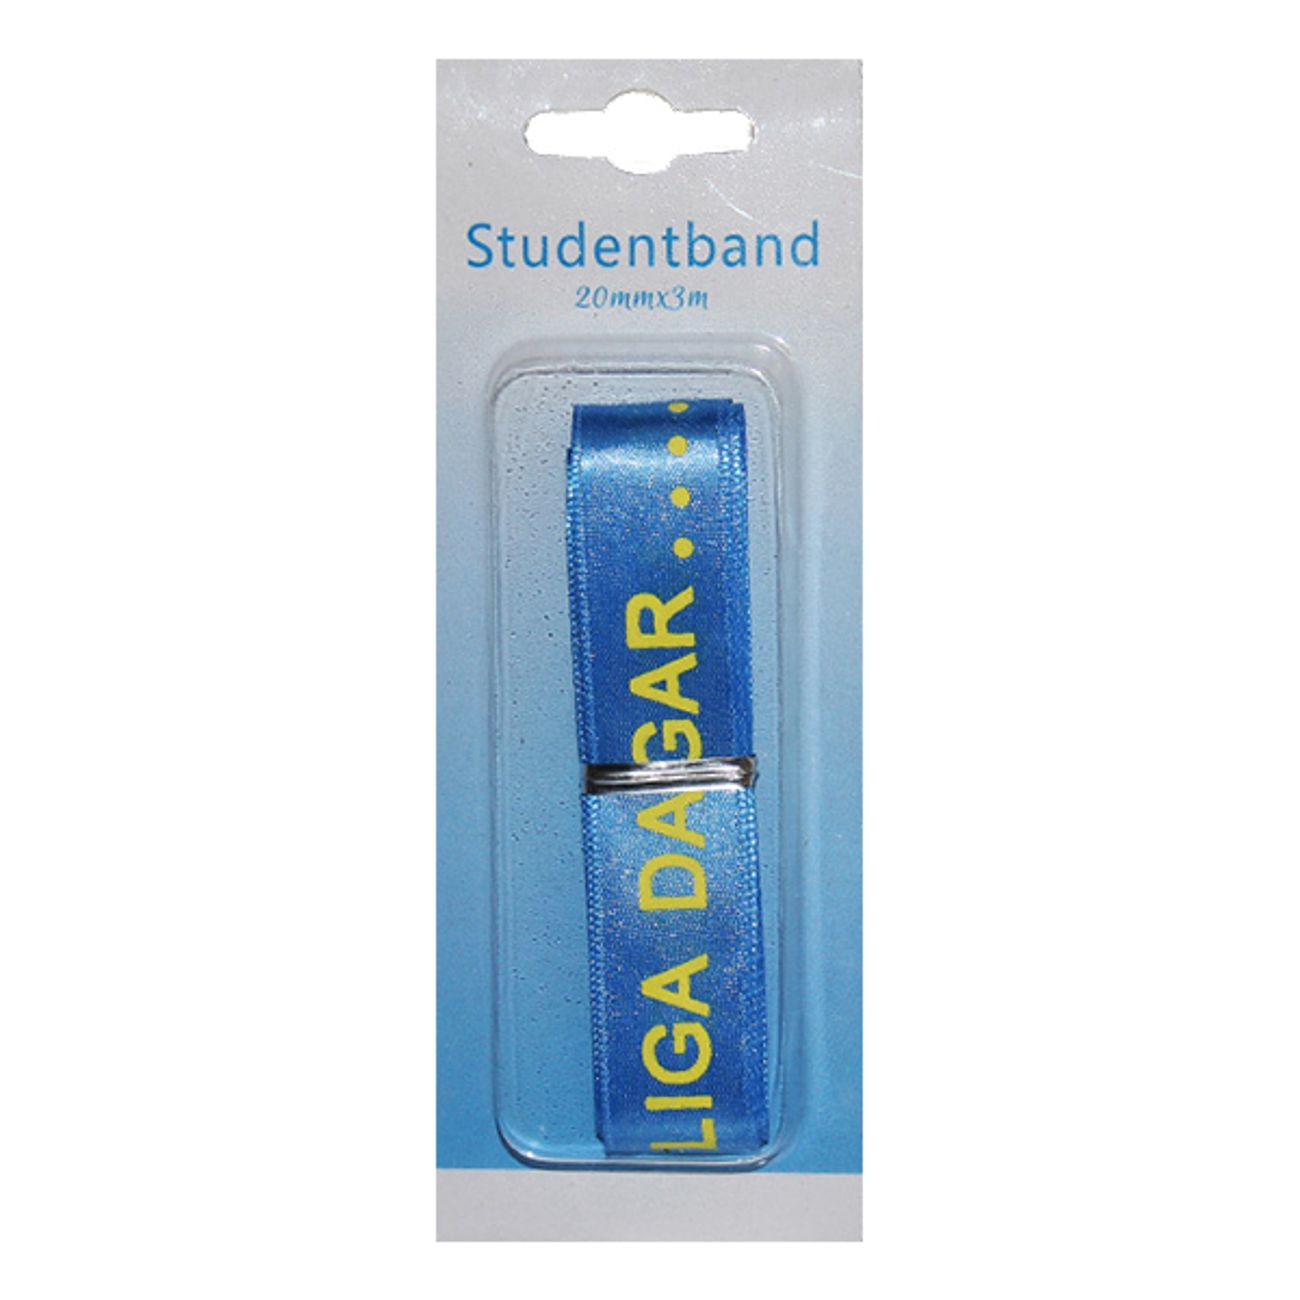 studentband-1